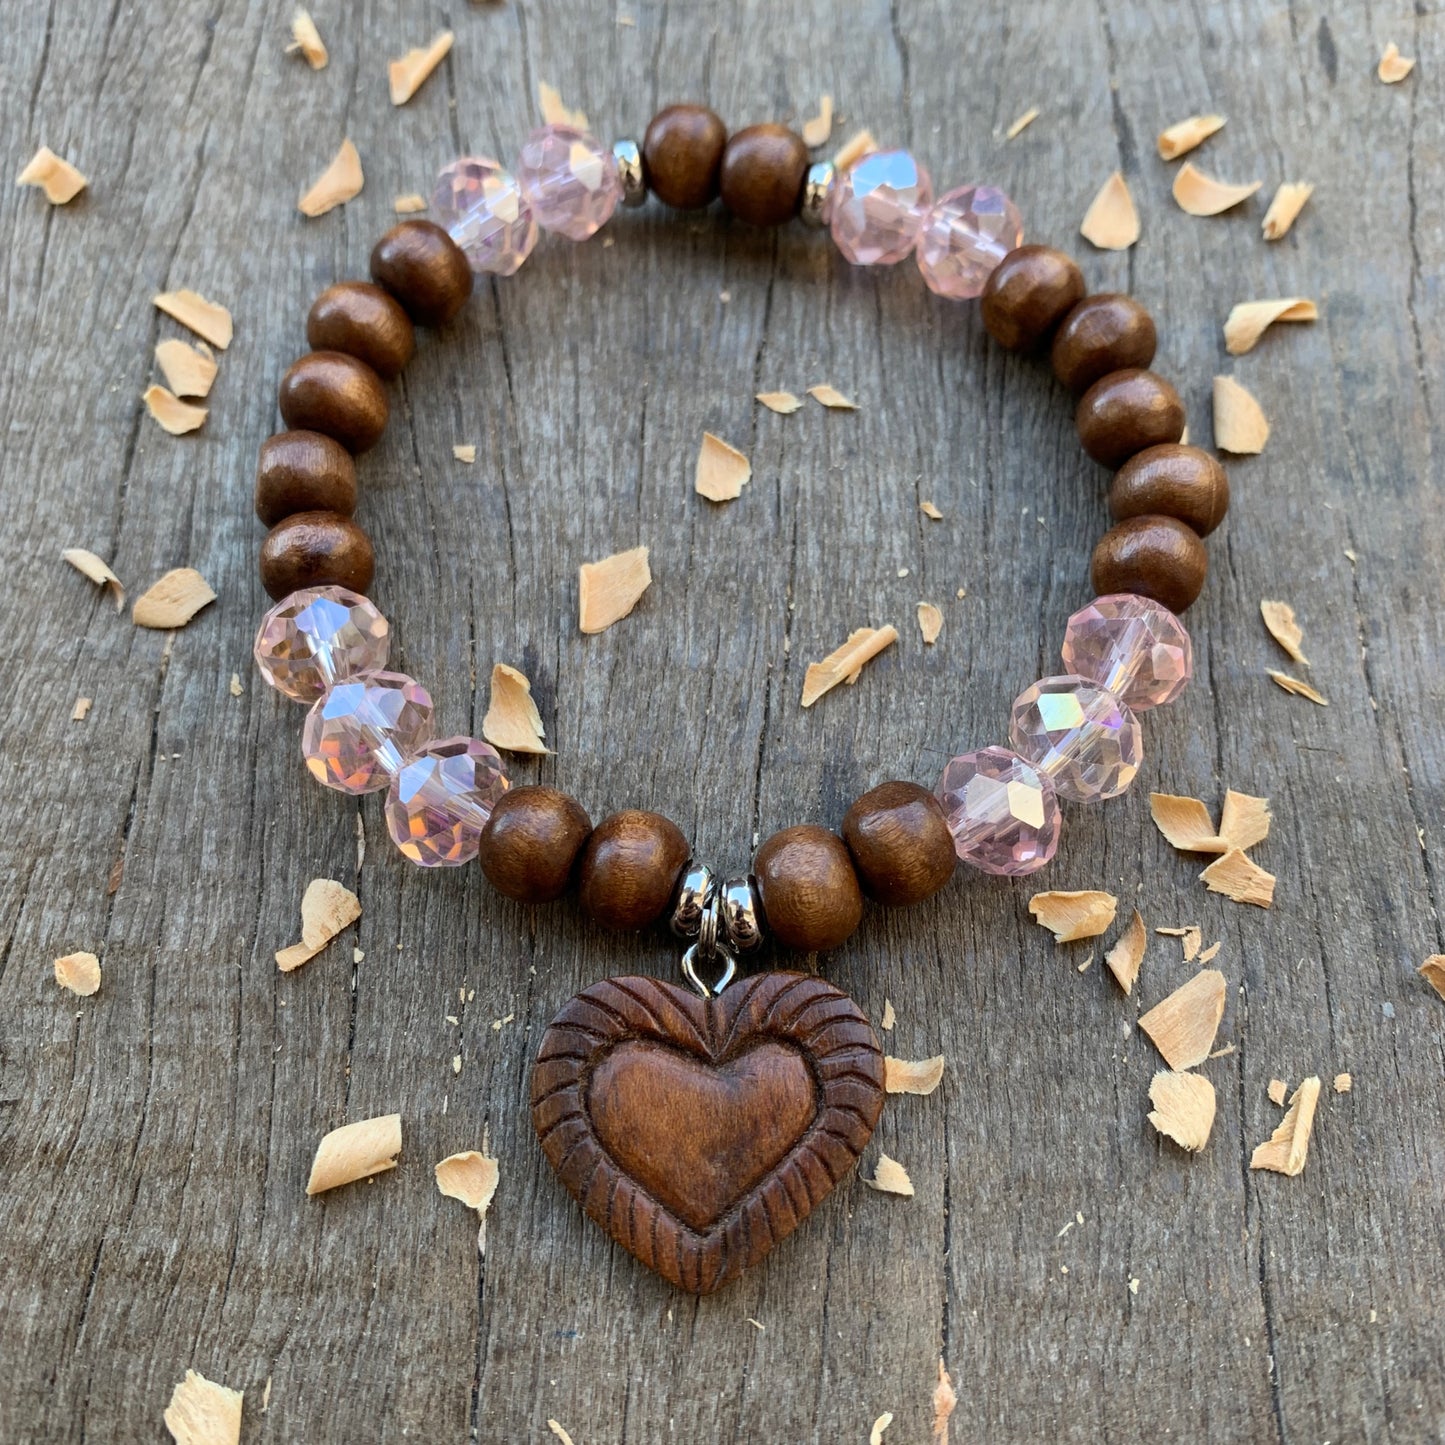 Beads Bracelet With Heart Pendant